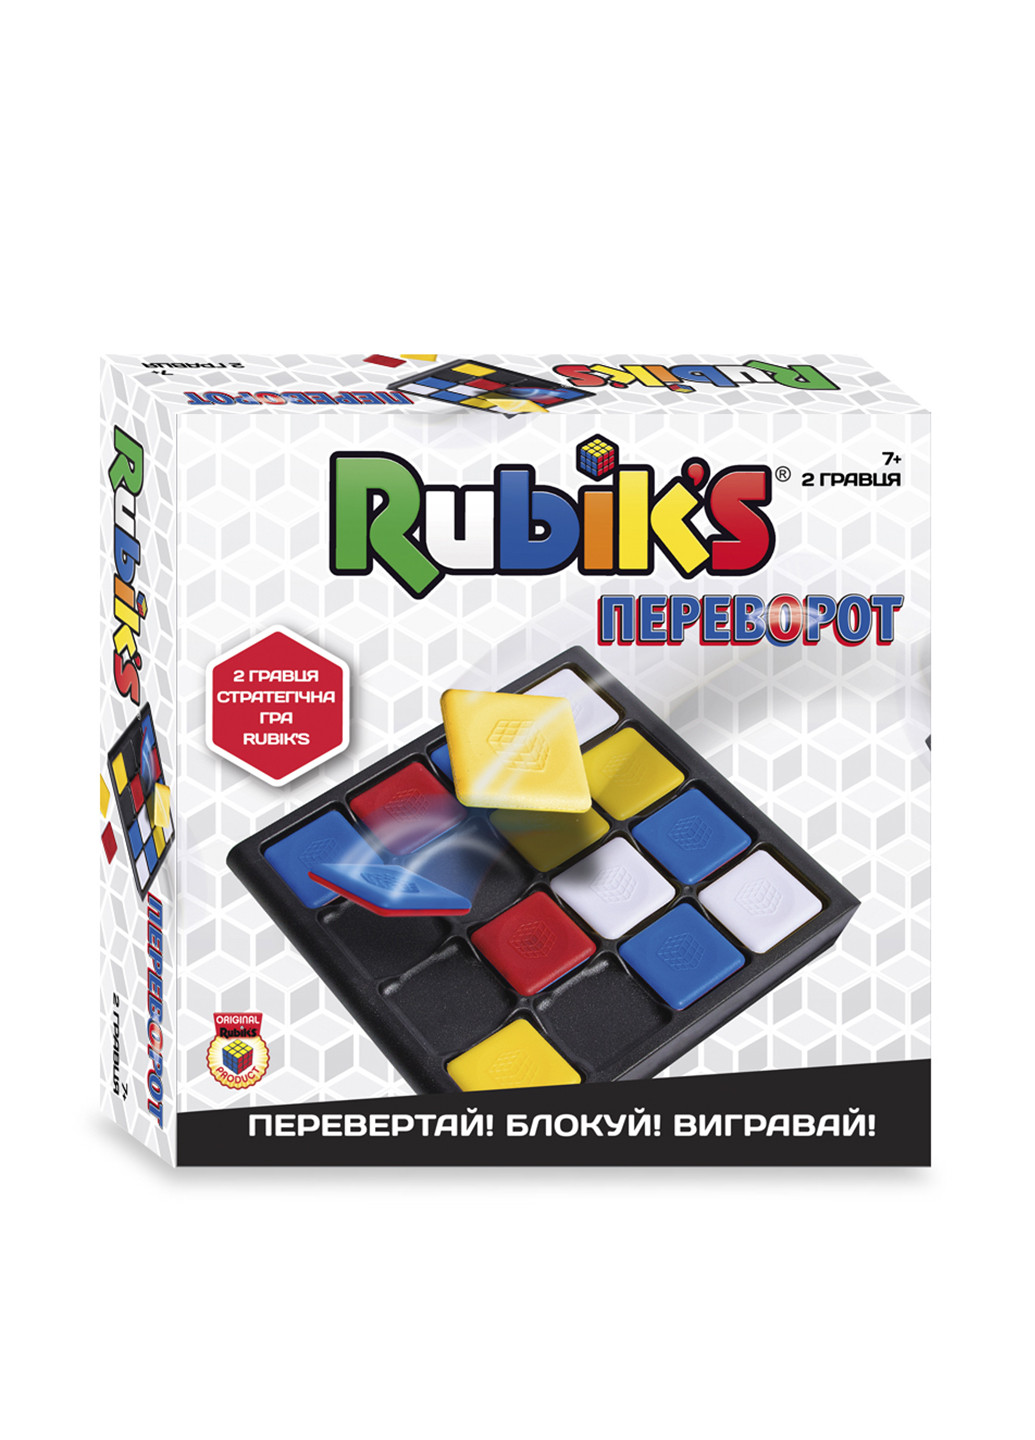 Игра - ПЕРЕВОРОТ Rubik's (83748102)